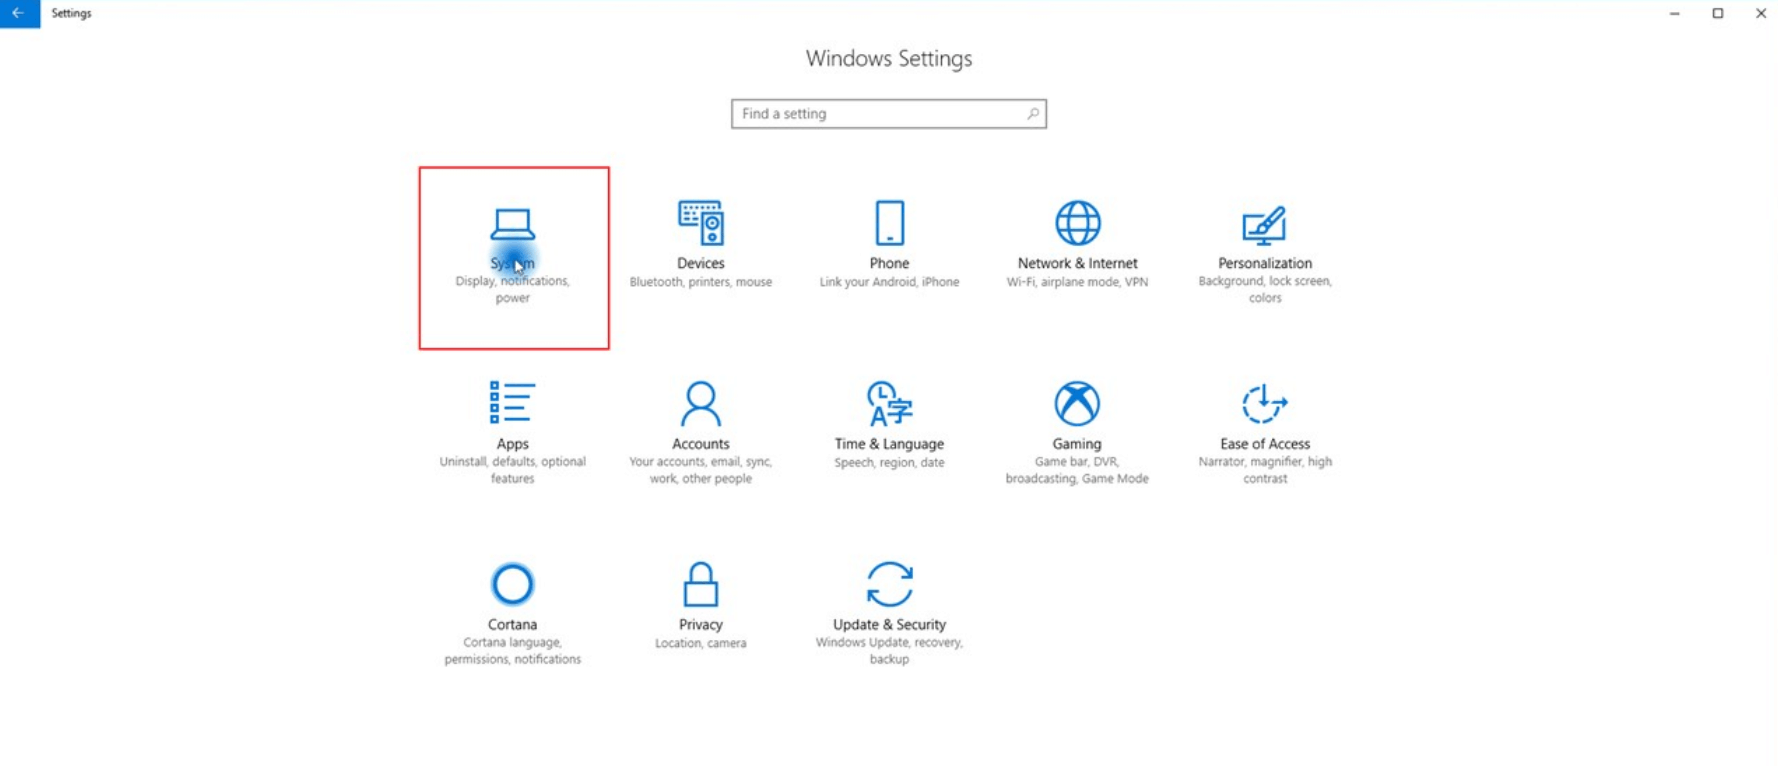 Microsoft introduces cortana show me app to help you navigate windows 10 settings - onmsft. Com - march 23, 2018